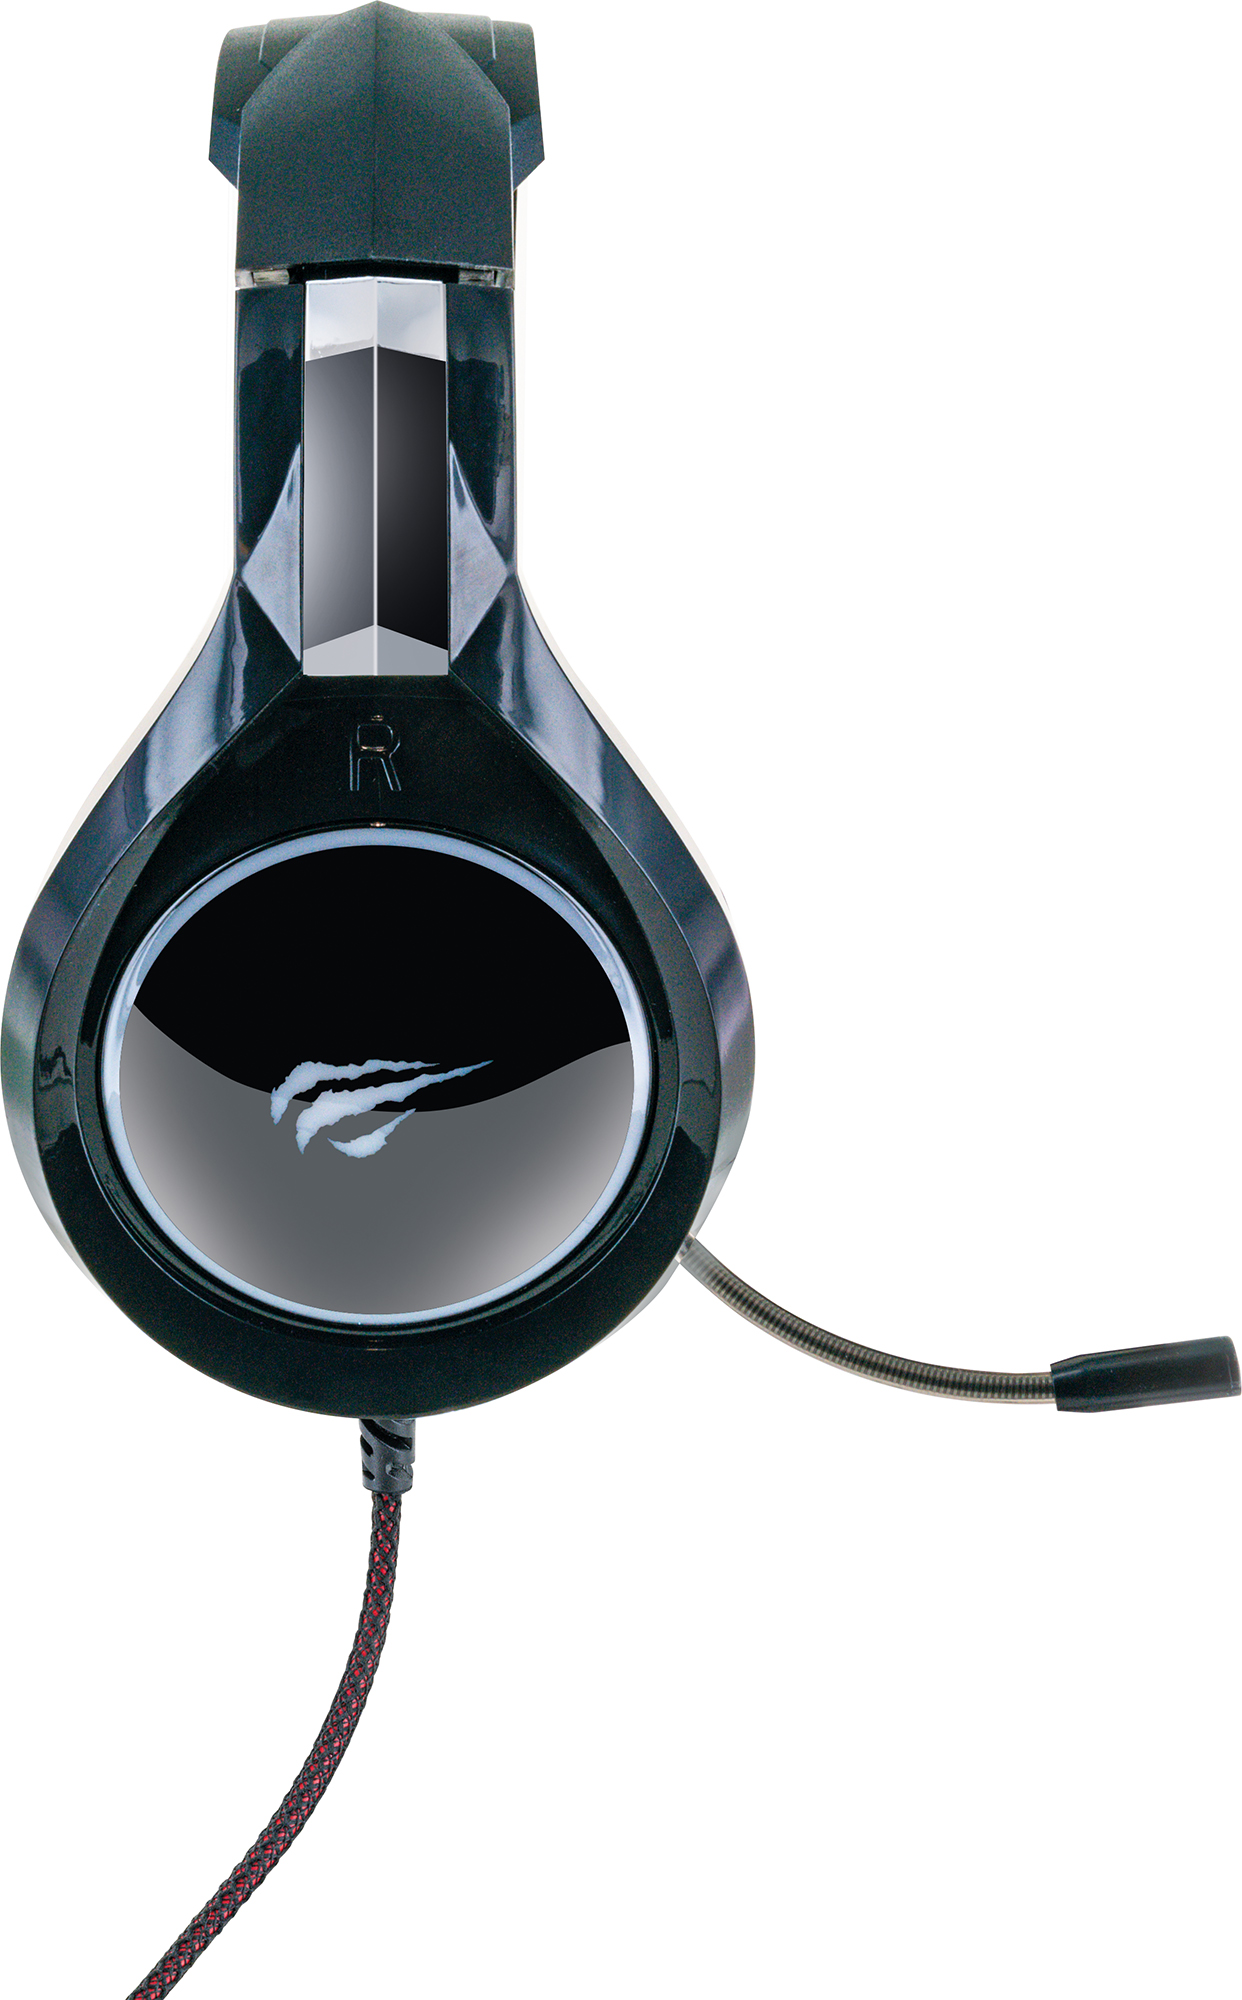 Headset Schwarz -GH50-, Over-ear SCHWAIGER Gaming